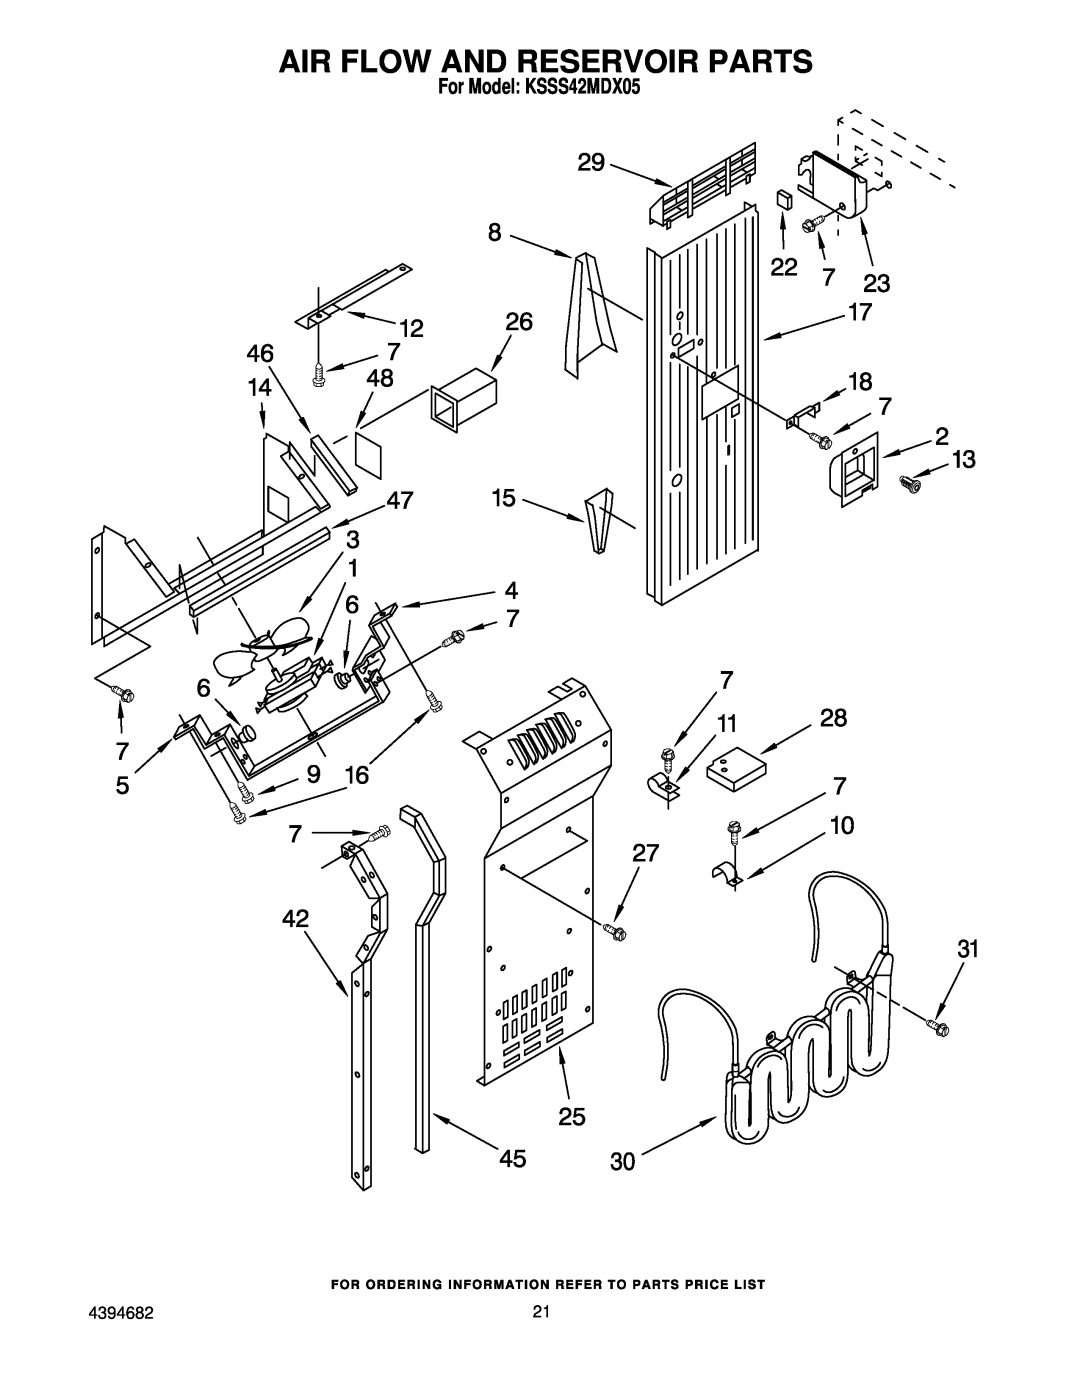 KitchenAid manual Air Flow And Reservoir Parts, For Model KSSS42MDX05 